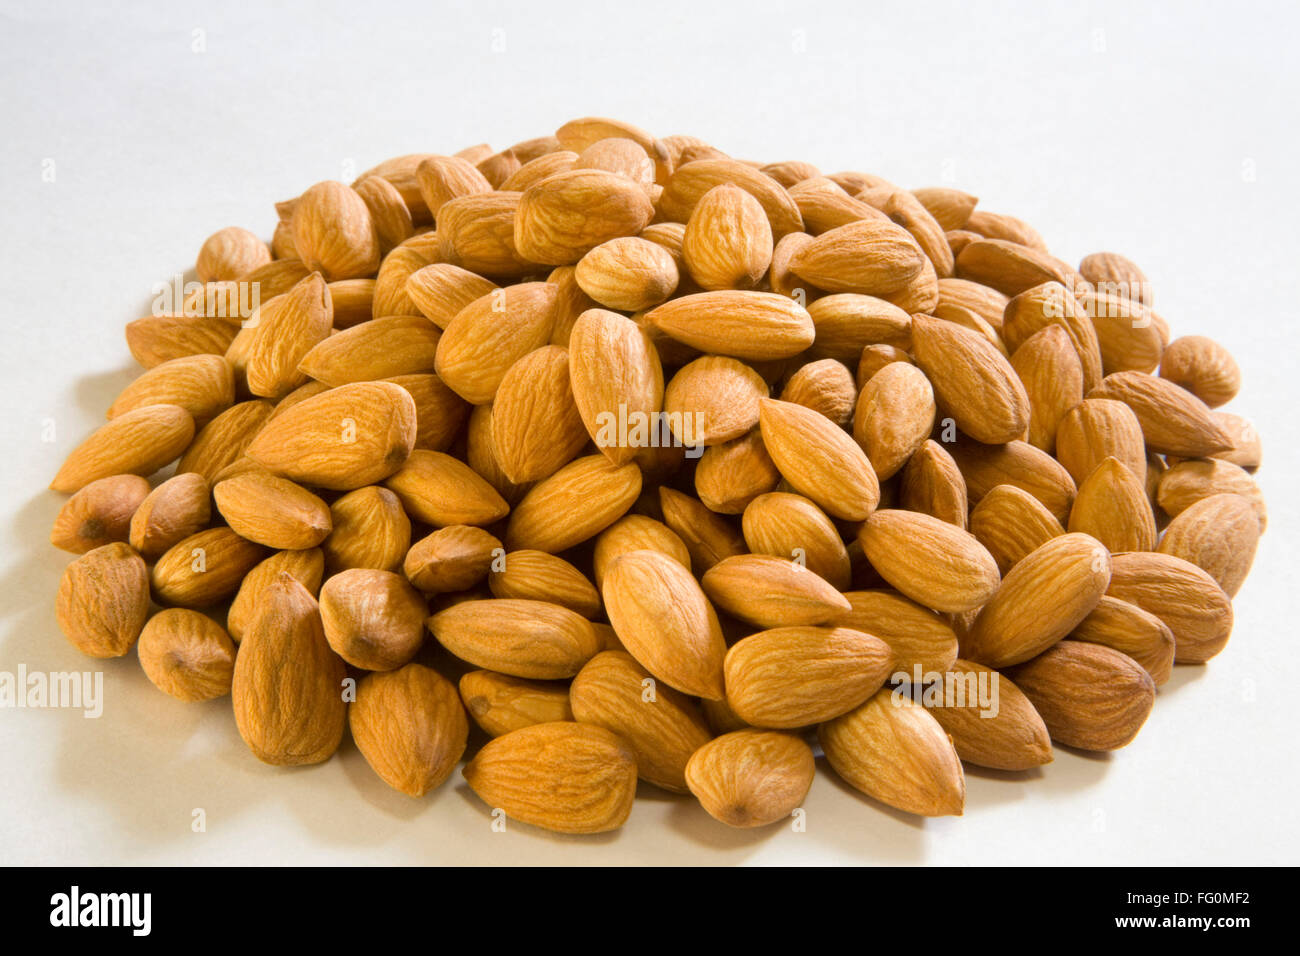 Almonds whole nuts almond heap pile Badam Prunus dulcis on white background Stock Photo